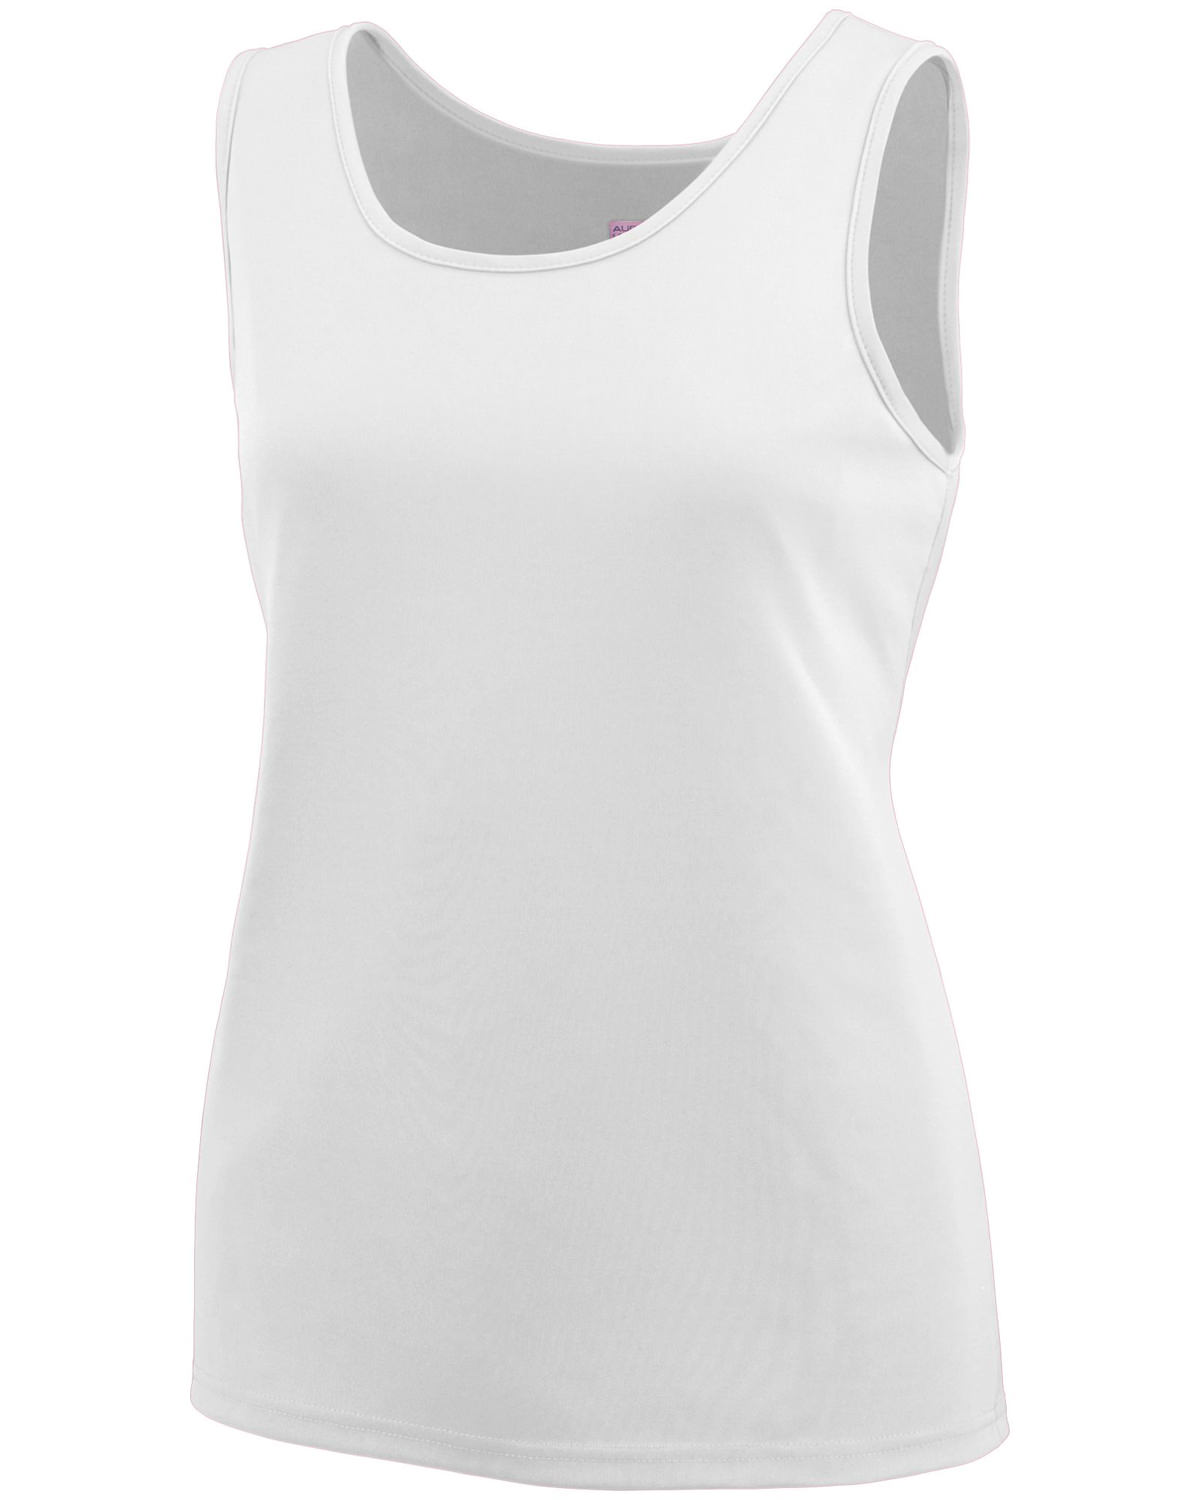 https://images.shirtspace.com/fullsize/wd8sQHD%2B2ZCziI3IC8h7GQ%3D%3D/98981/4432-augusta-sportswear-1705-ladies-training-tank-front-white.jpg